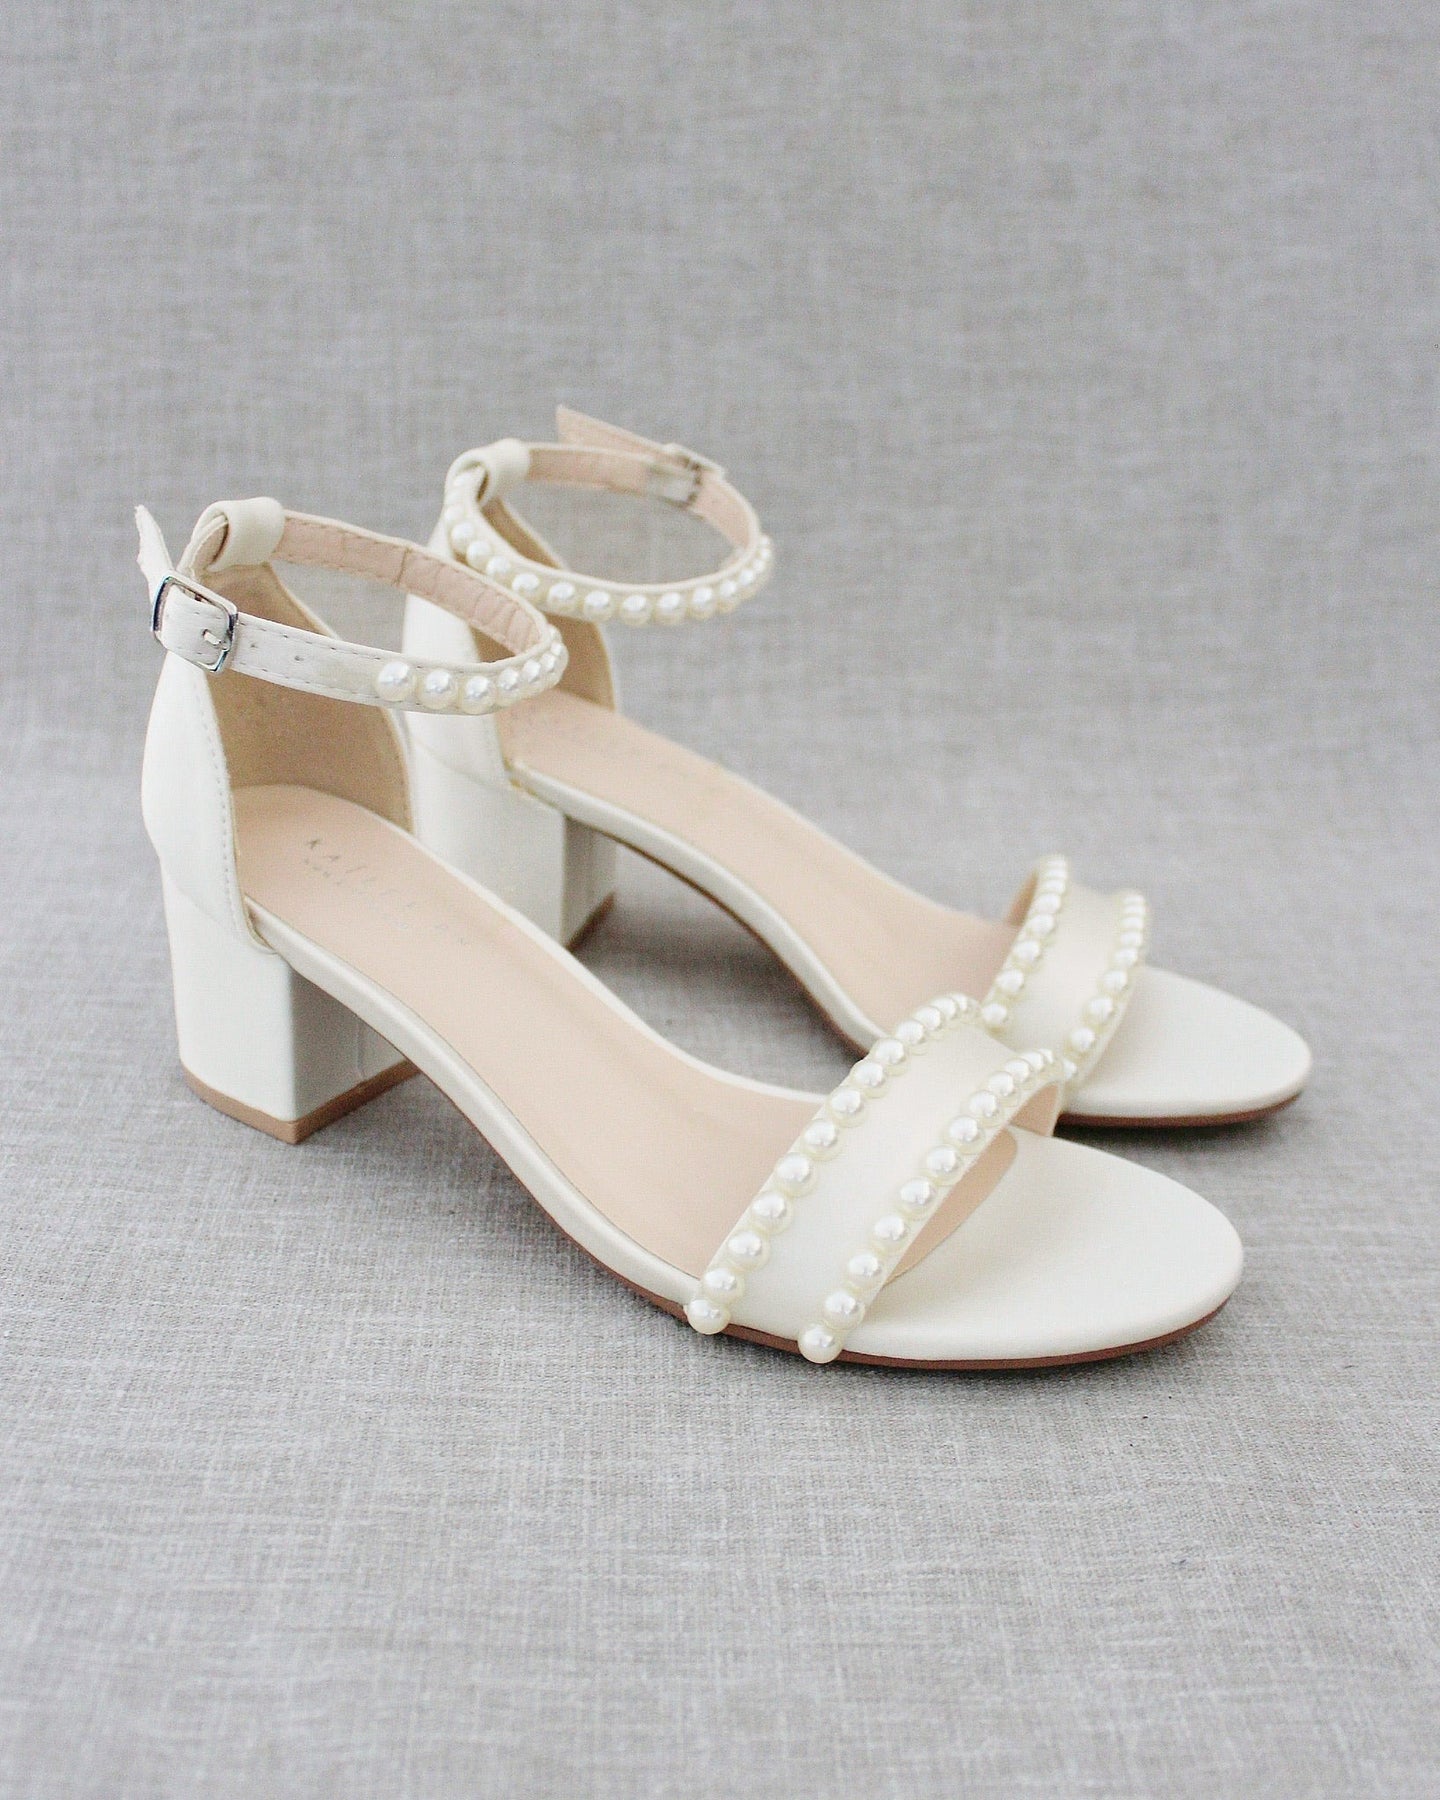 Ivory Satin Block Heel Sandals with Pearls - Women Sandals, Wedding ...